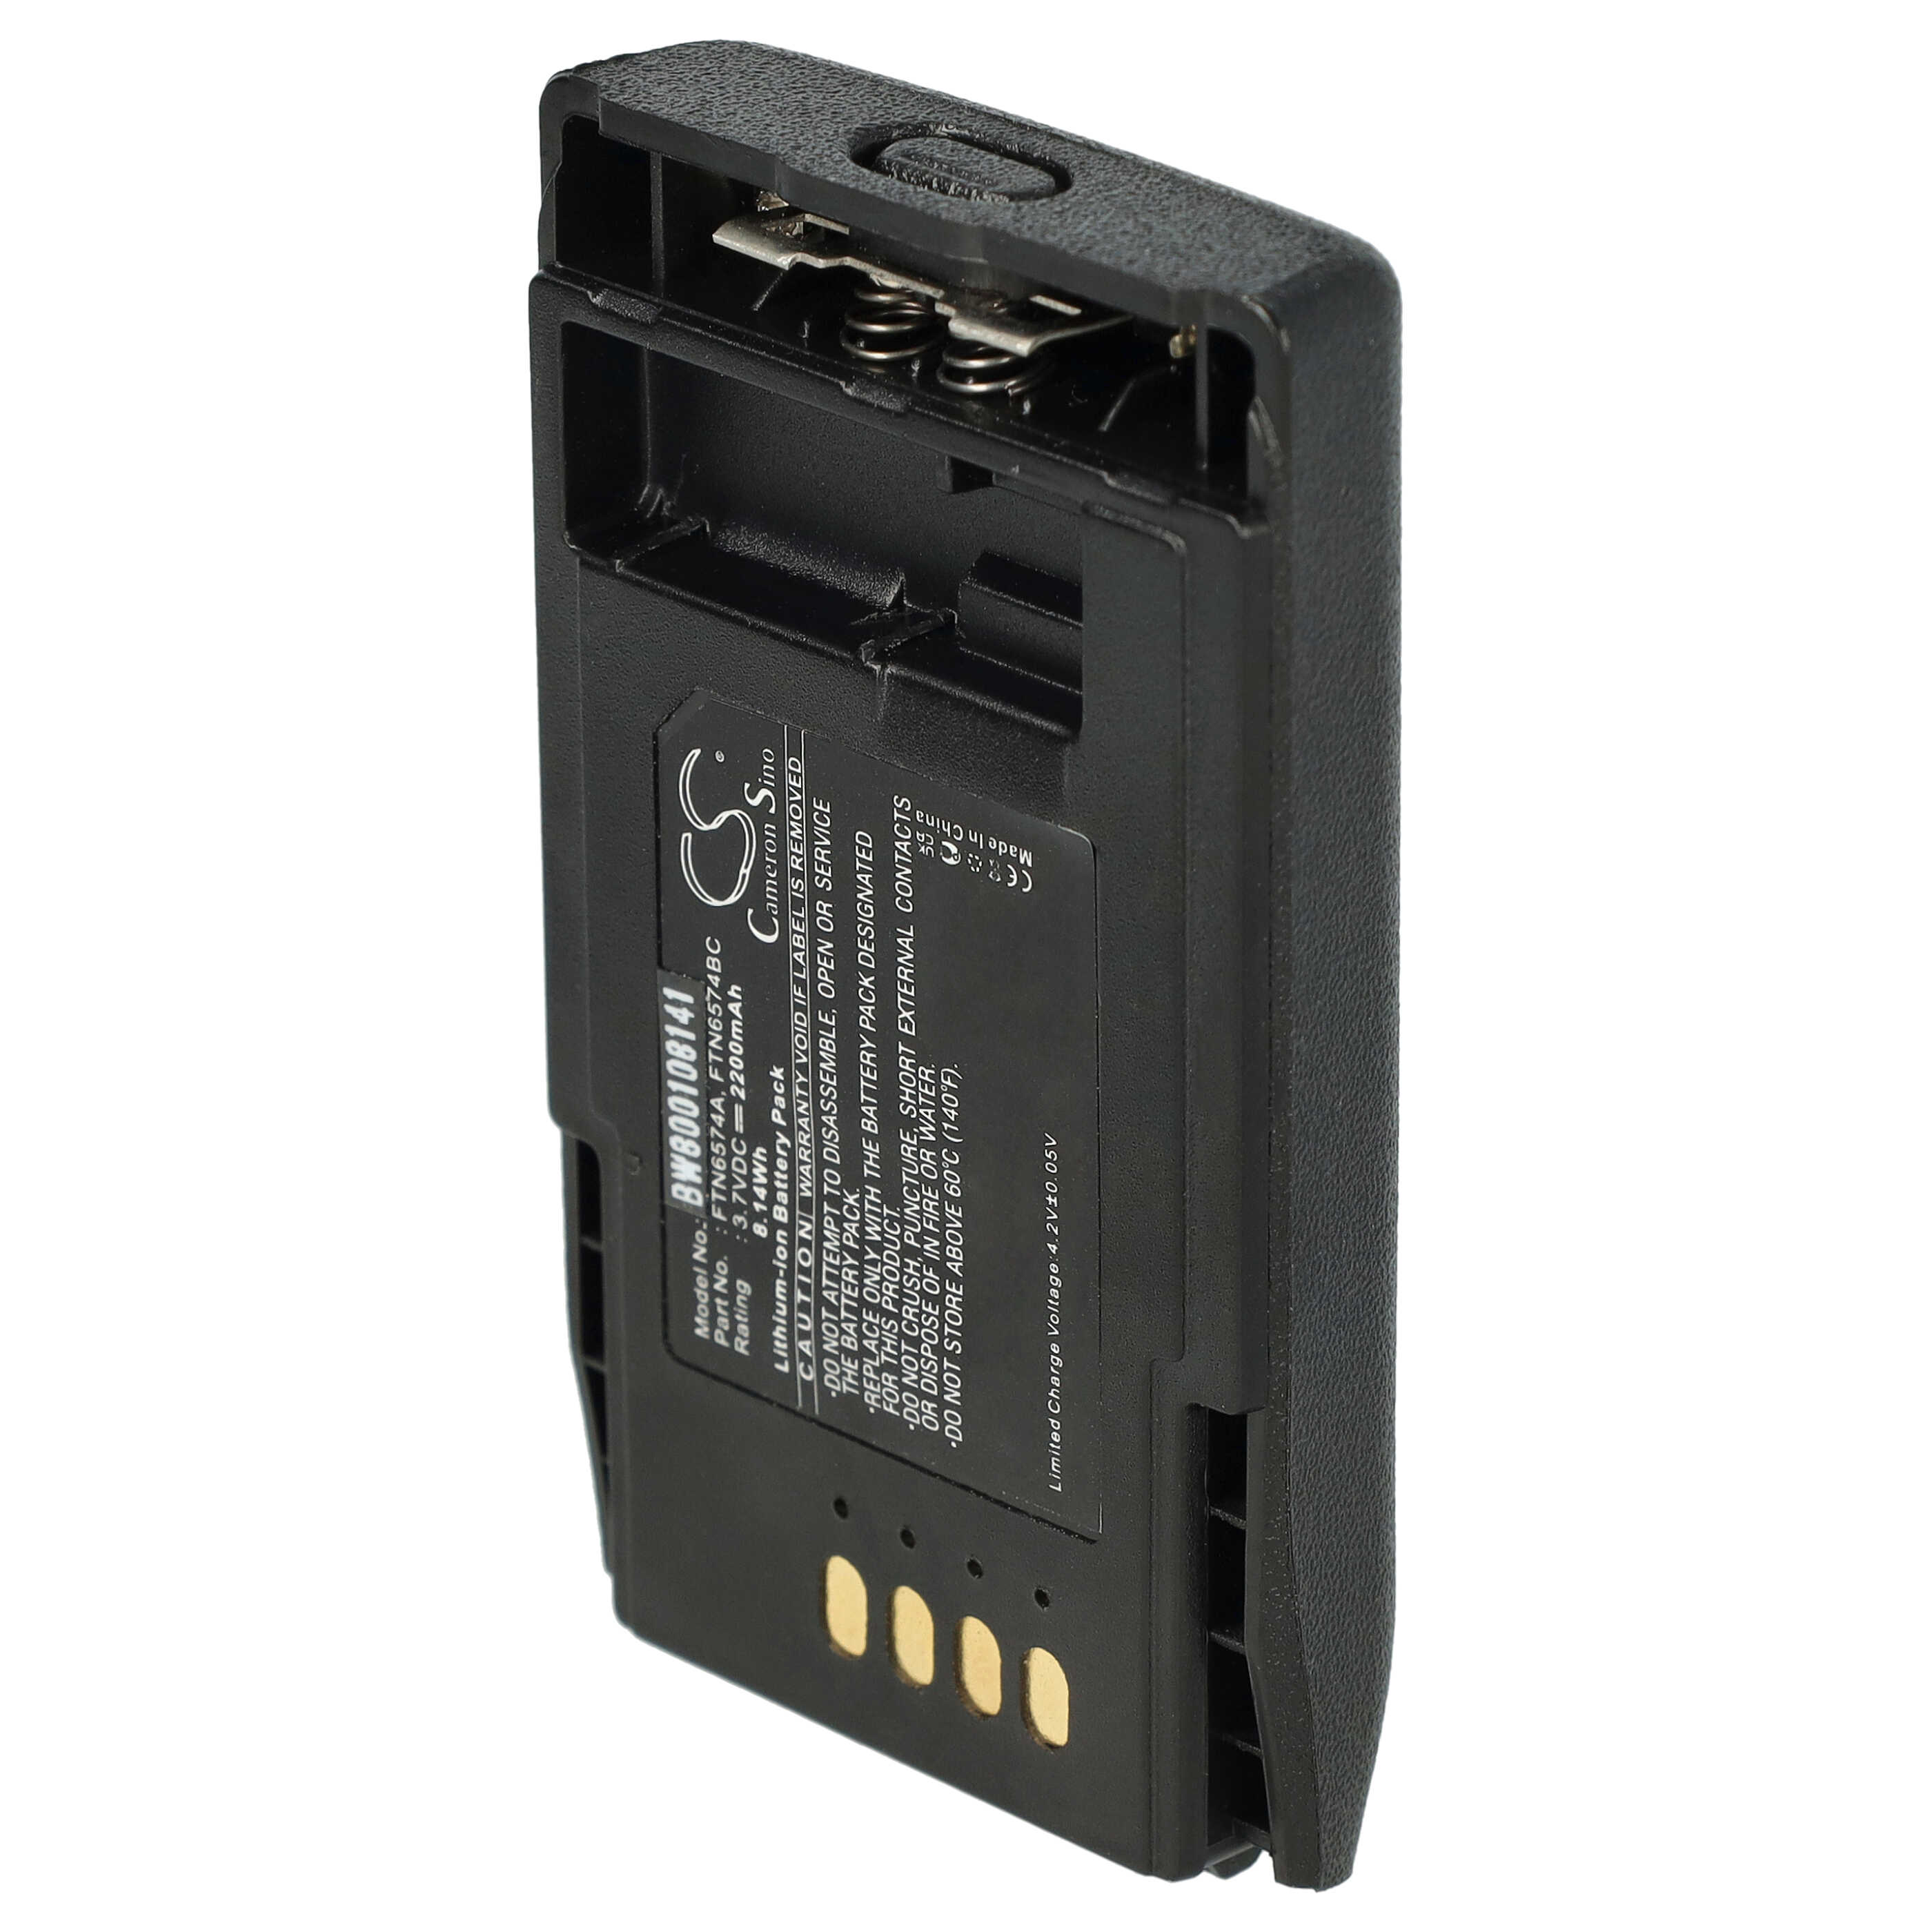 Batterie remplace Motorola AP-6574, FTN6574A, FTN6574 pour radio talkie-walkie - 2200mAh 3,7V Li-ion